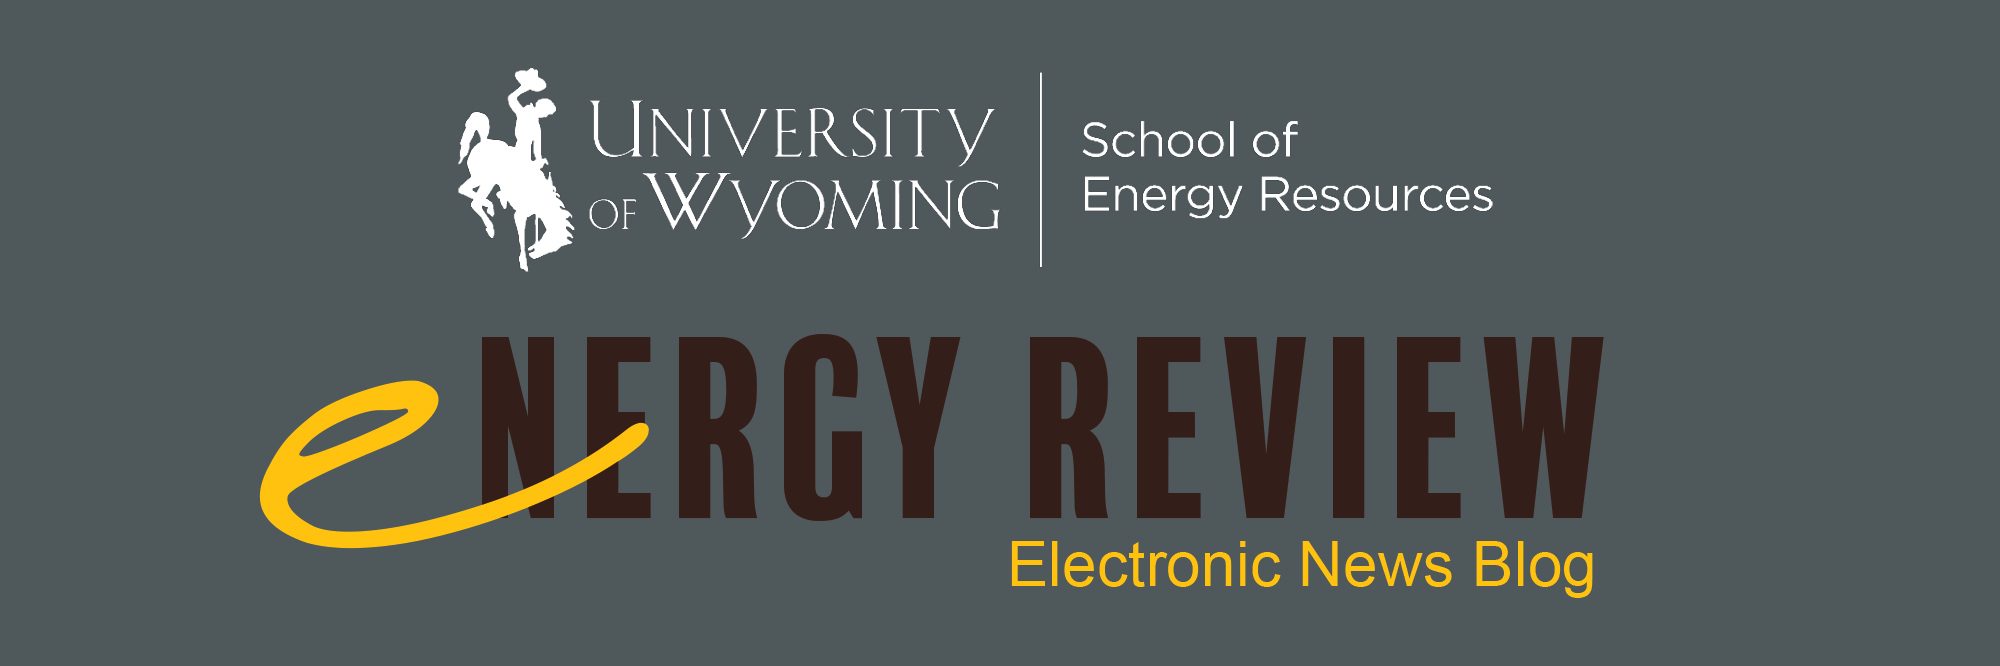 UW School of Energy Resources Energy Review